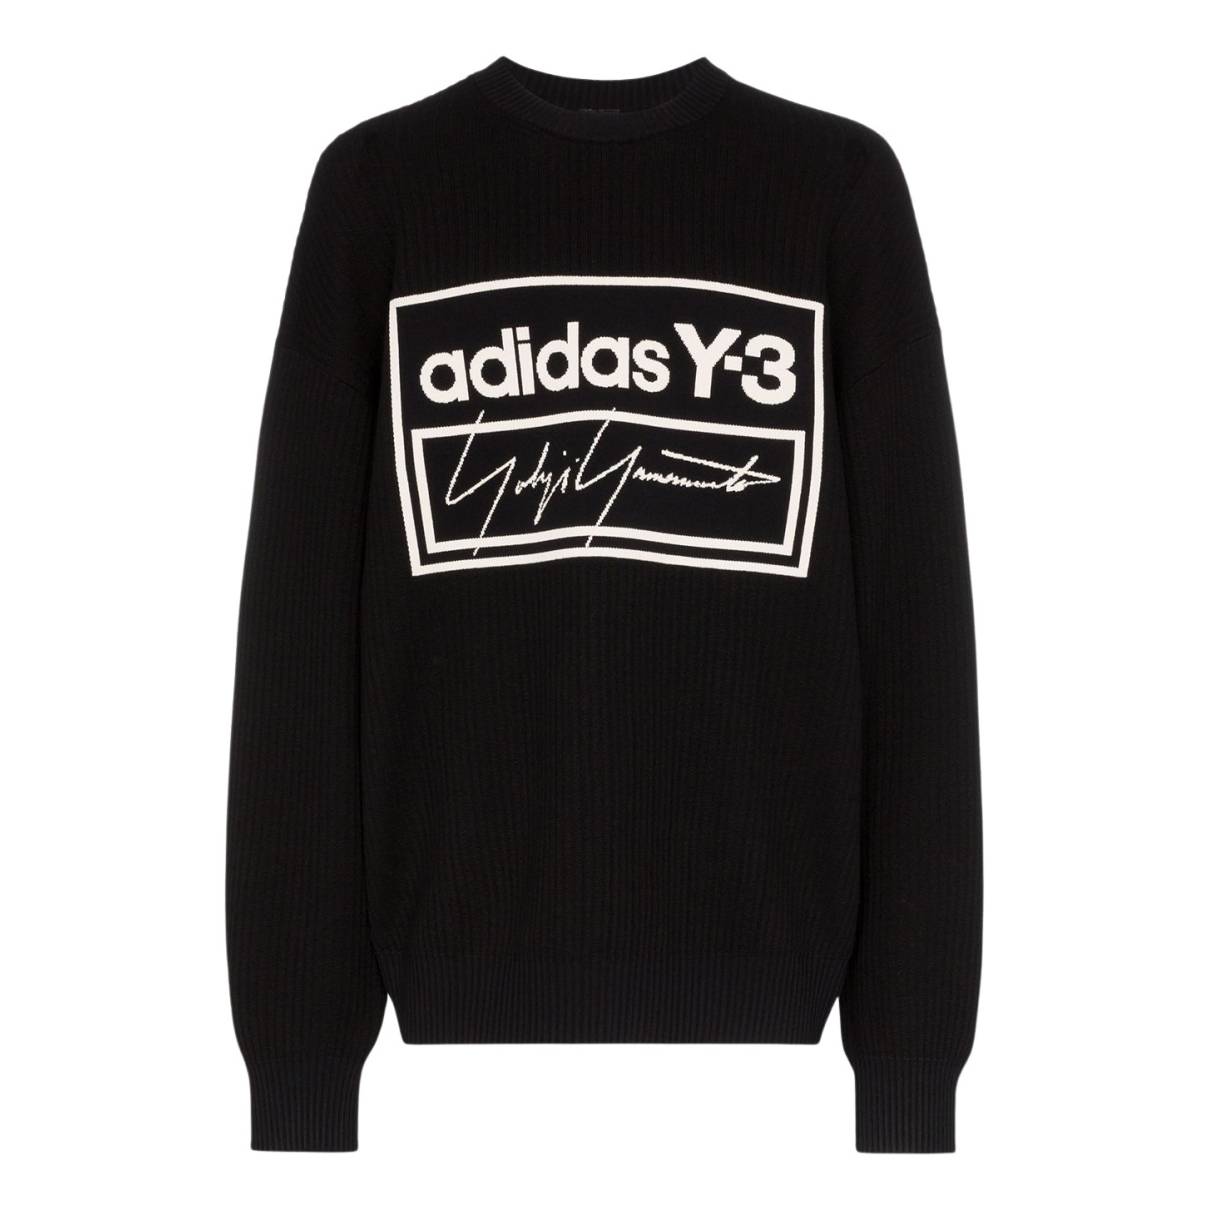 Sweatshirt Y-3 by Yohji Yamamoto Black size L International in